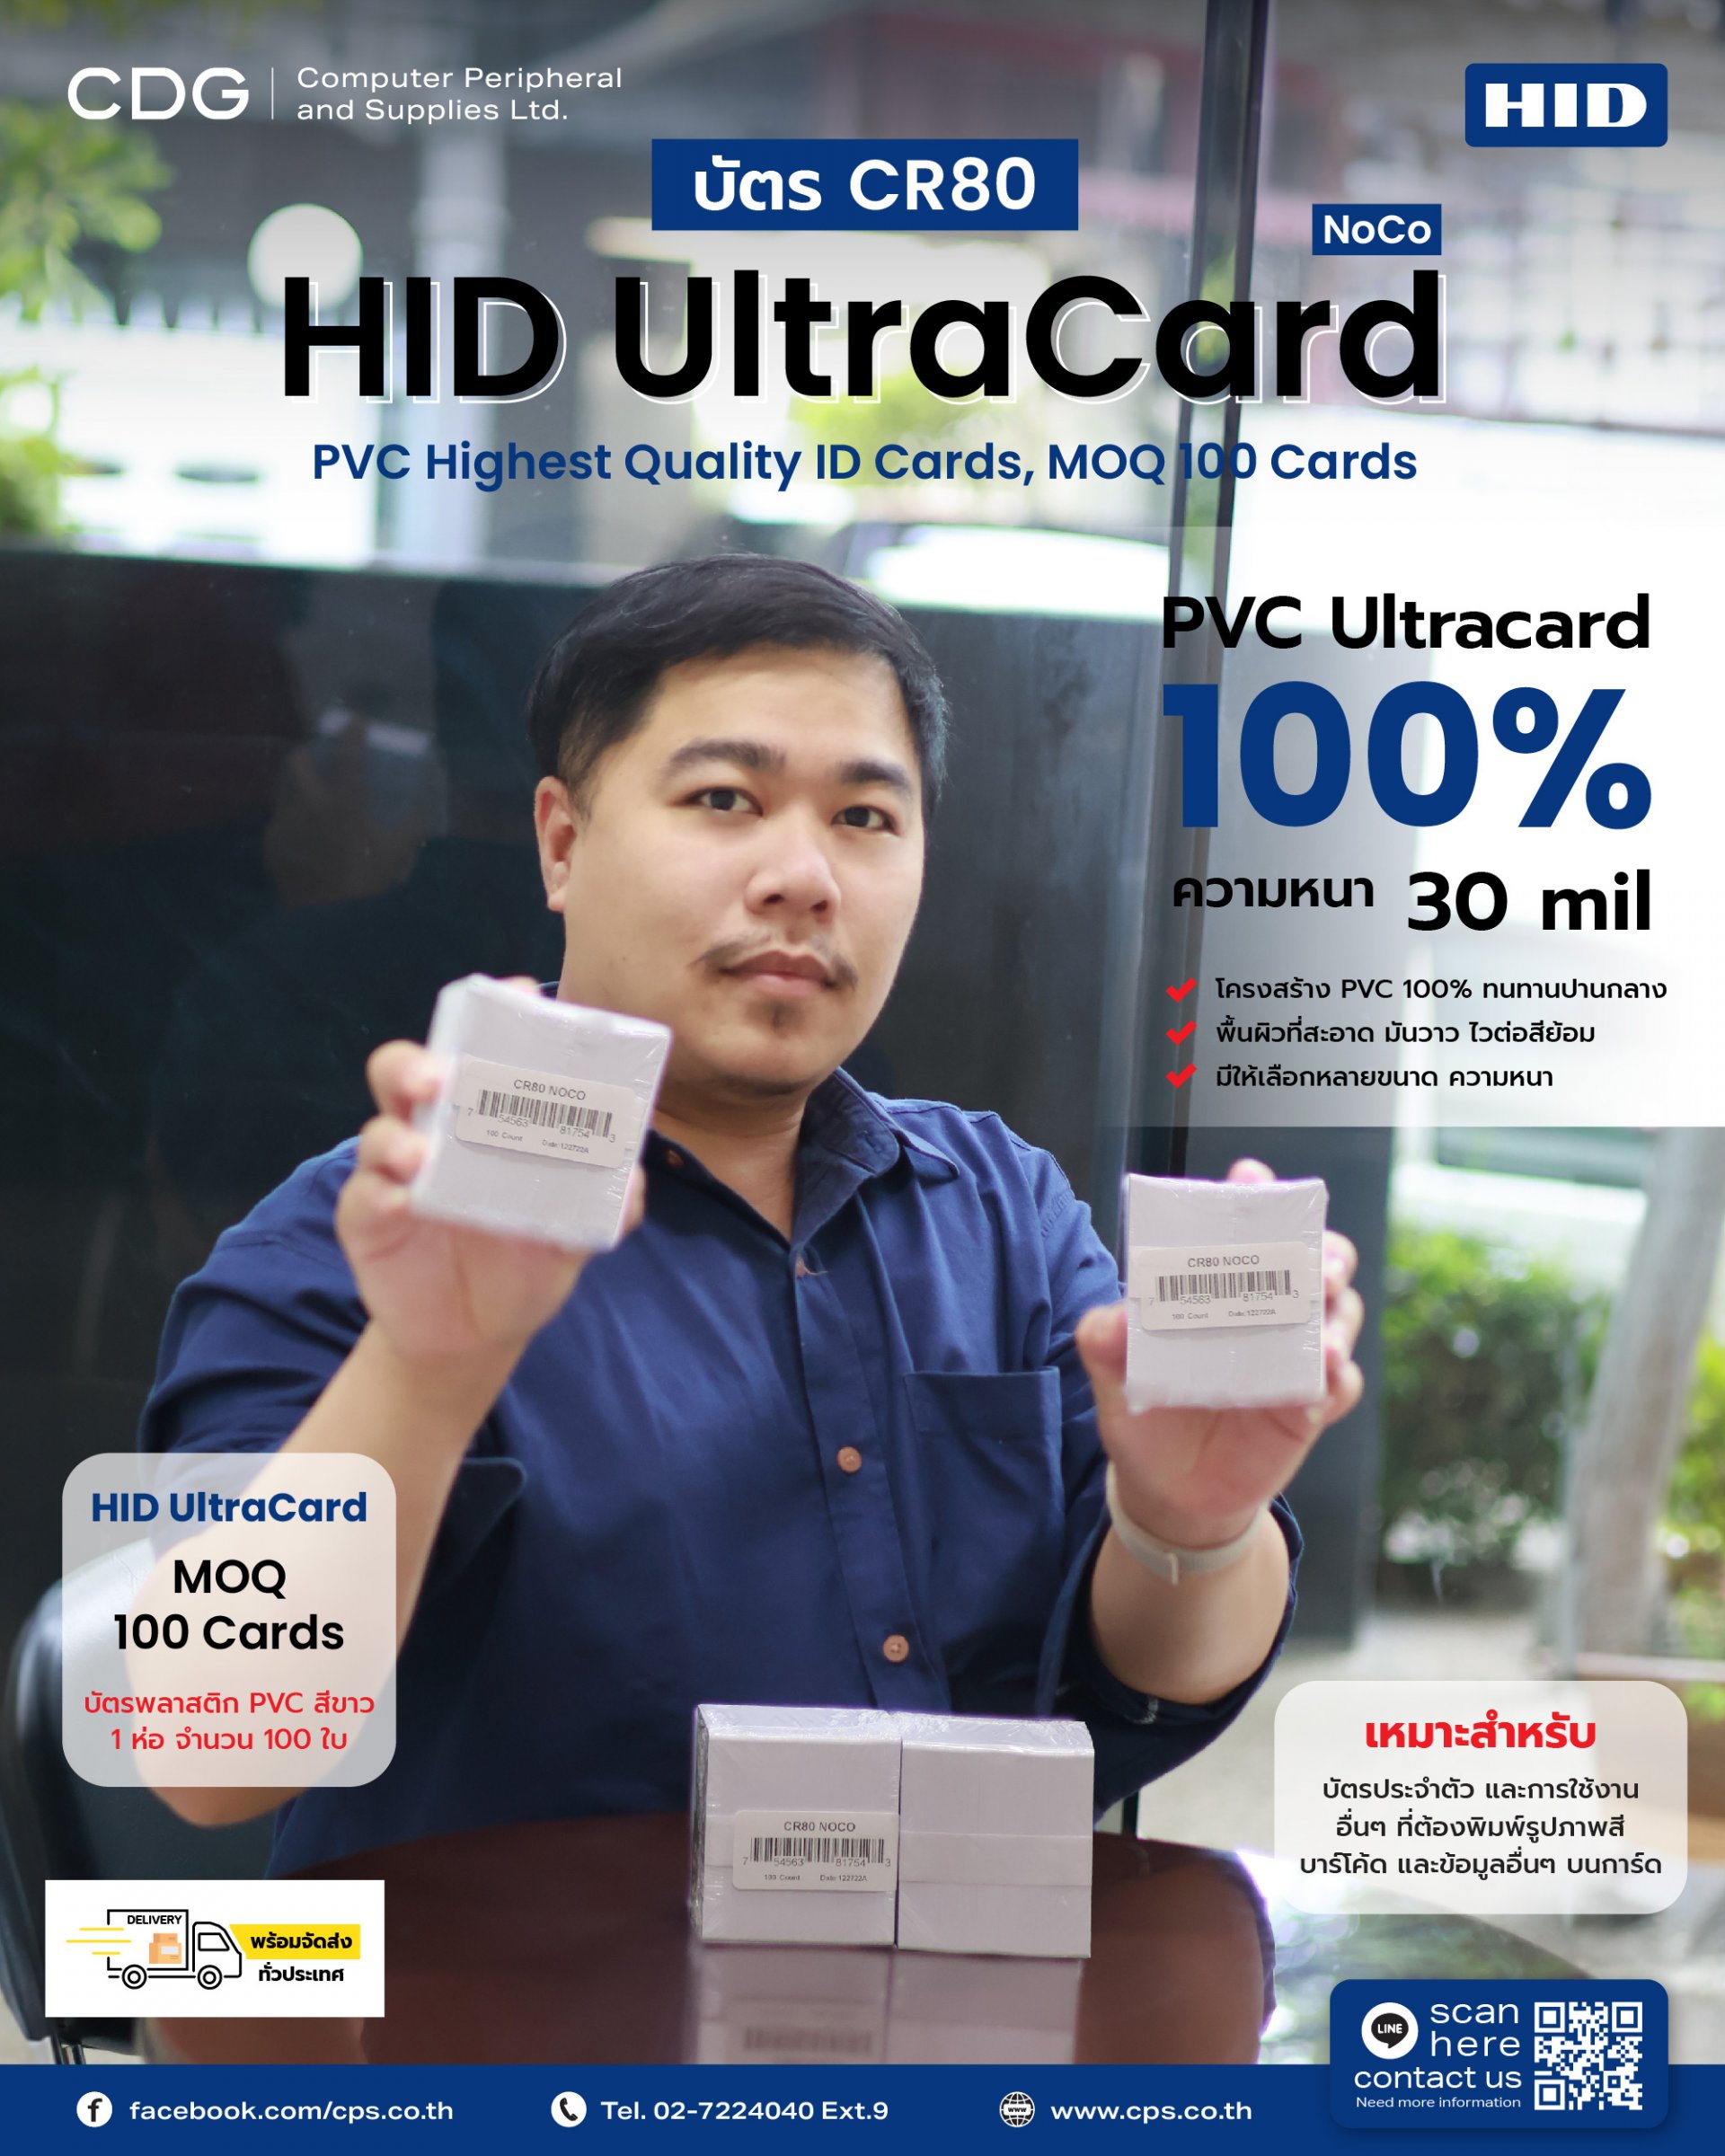 HID UltraCard CR80 PVC 100% Highest Quality ID Cards